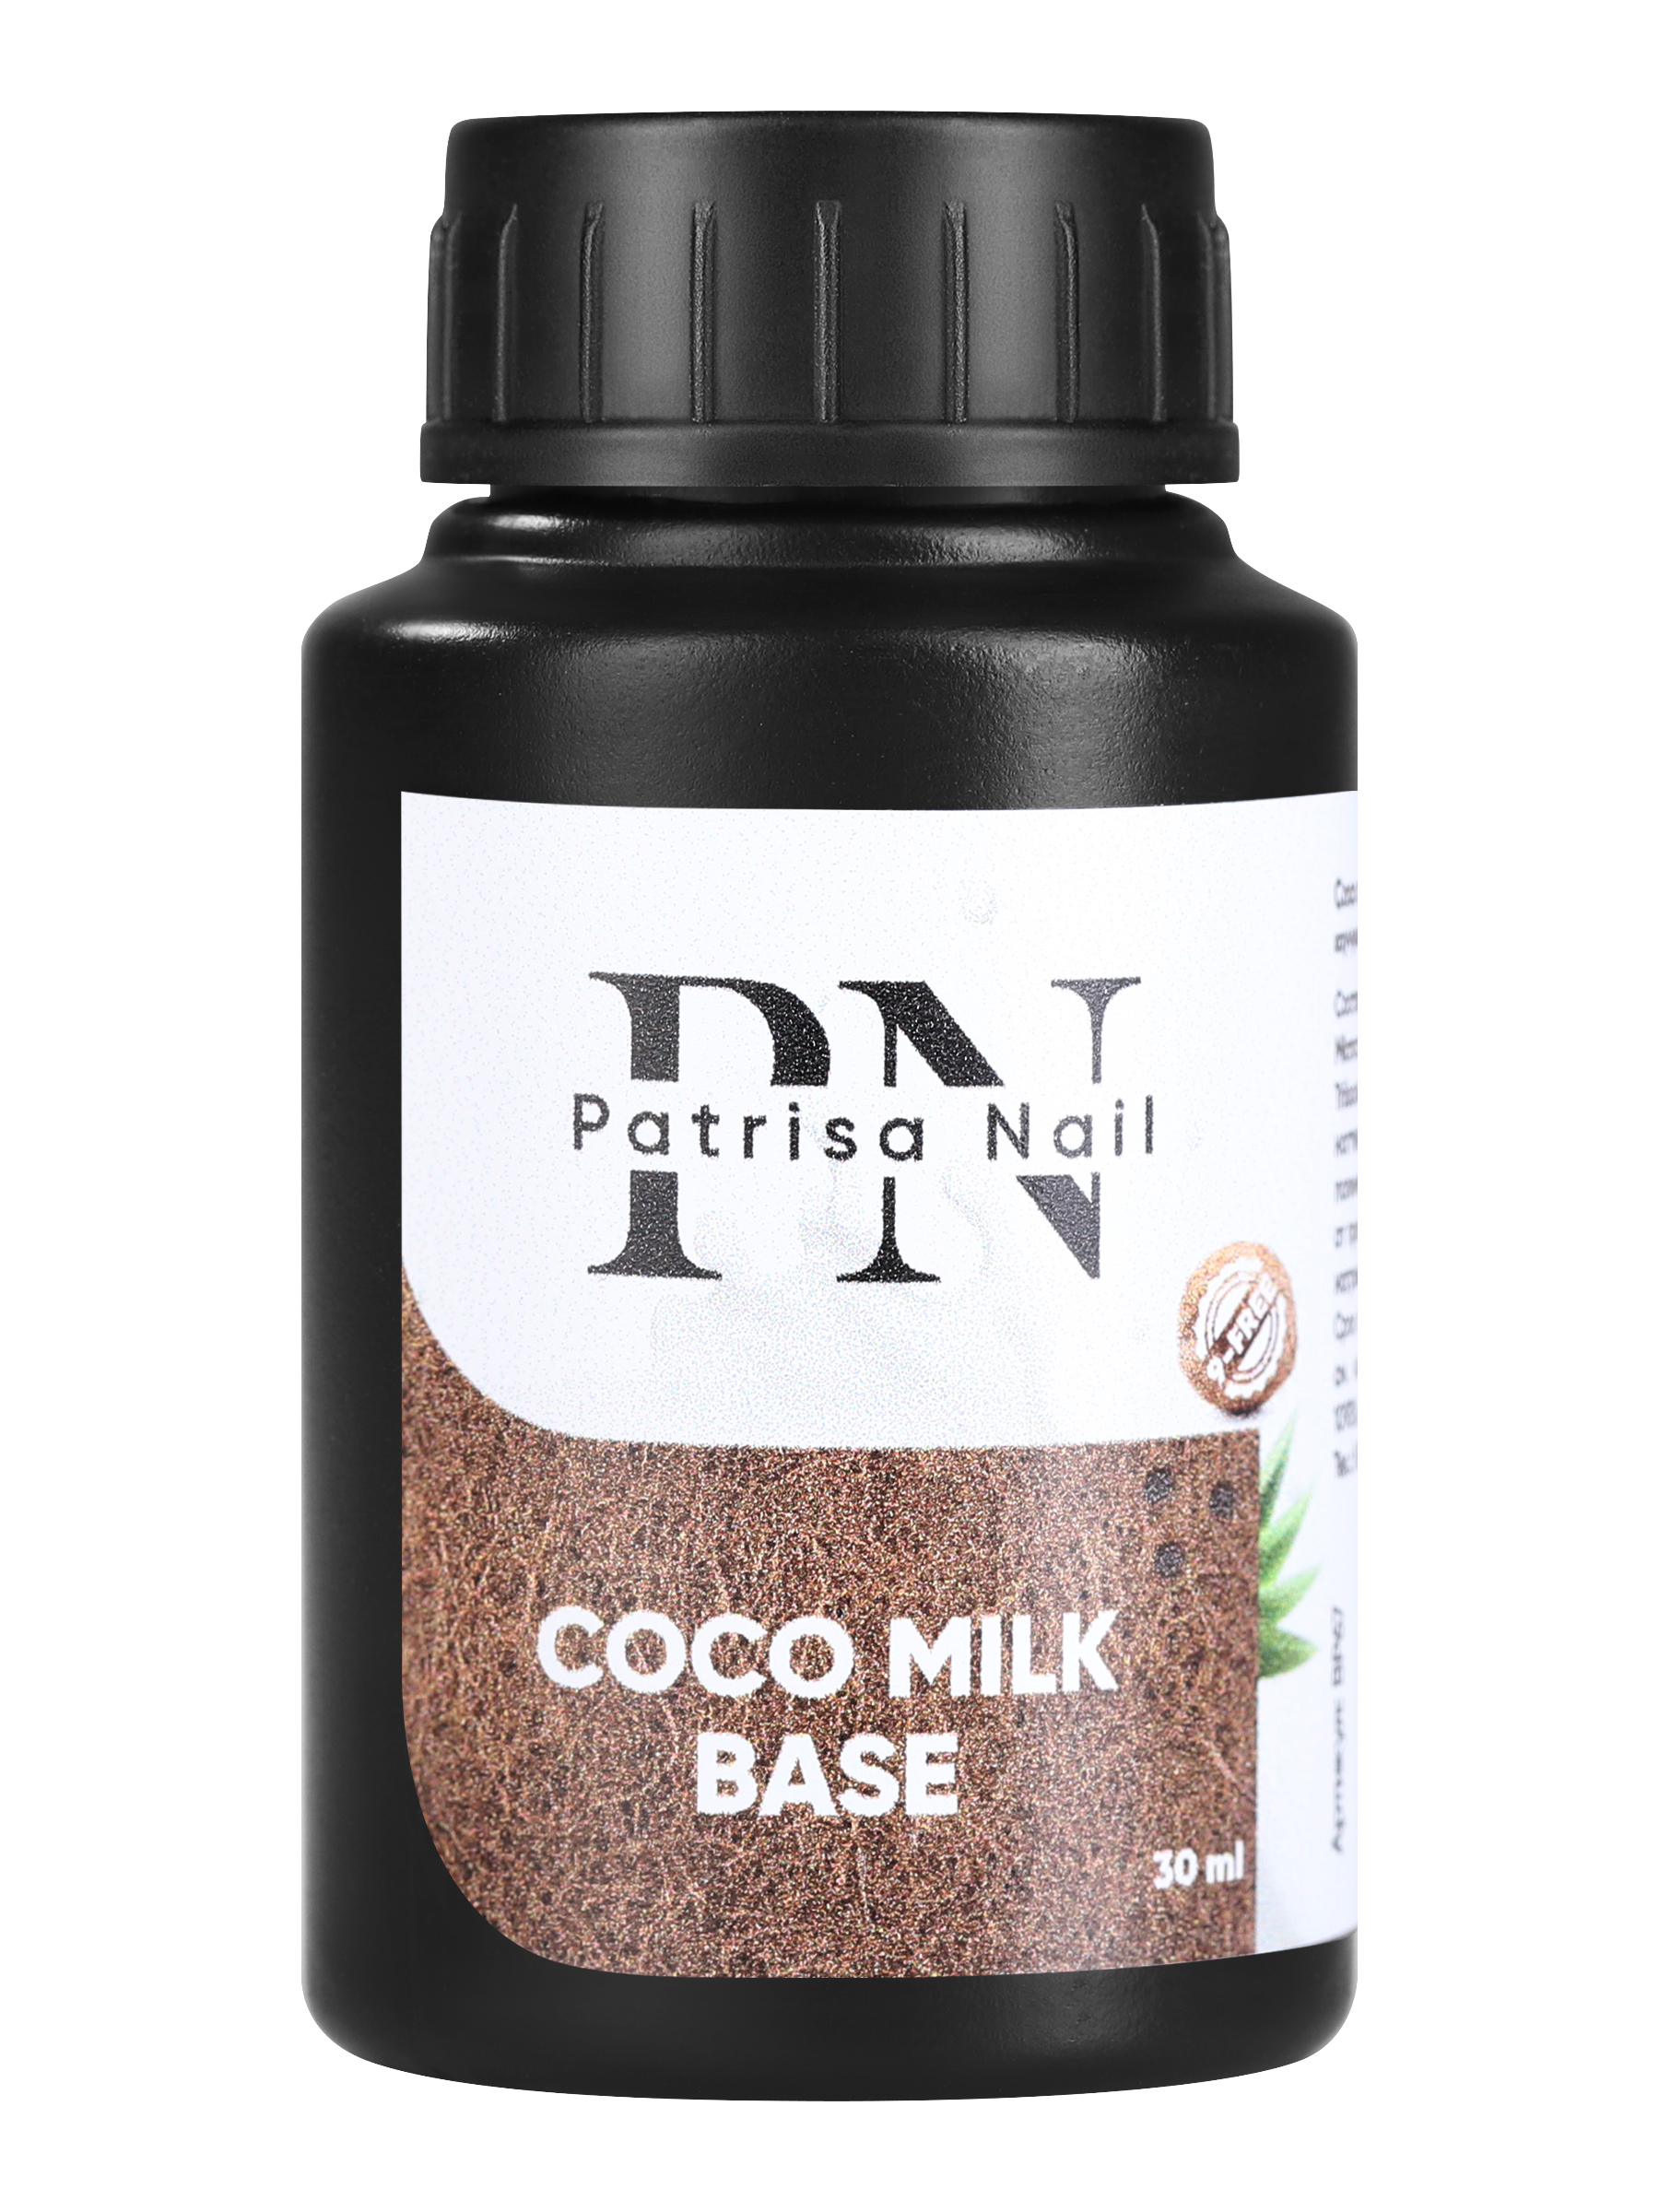 База для гель-лака Patrisa Nail Coco milk base камуфлирующая каучуковая молочная, 30 мл камуфлирующая база adricoco la creme base 07 лавандовое молоко 10 мл